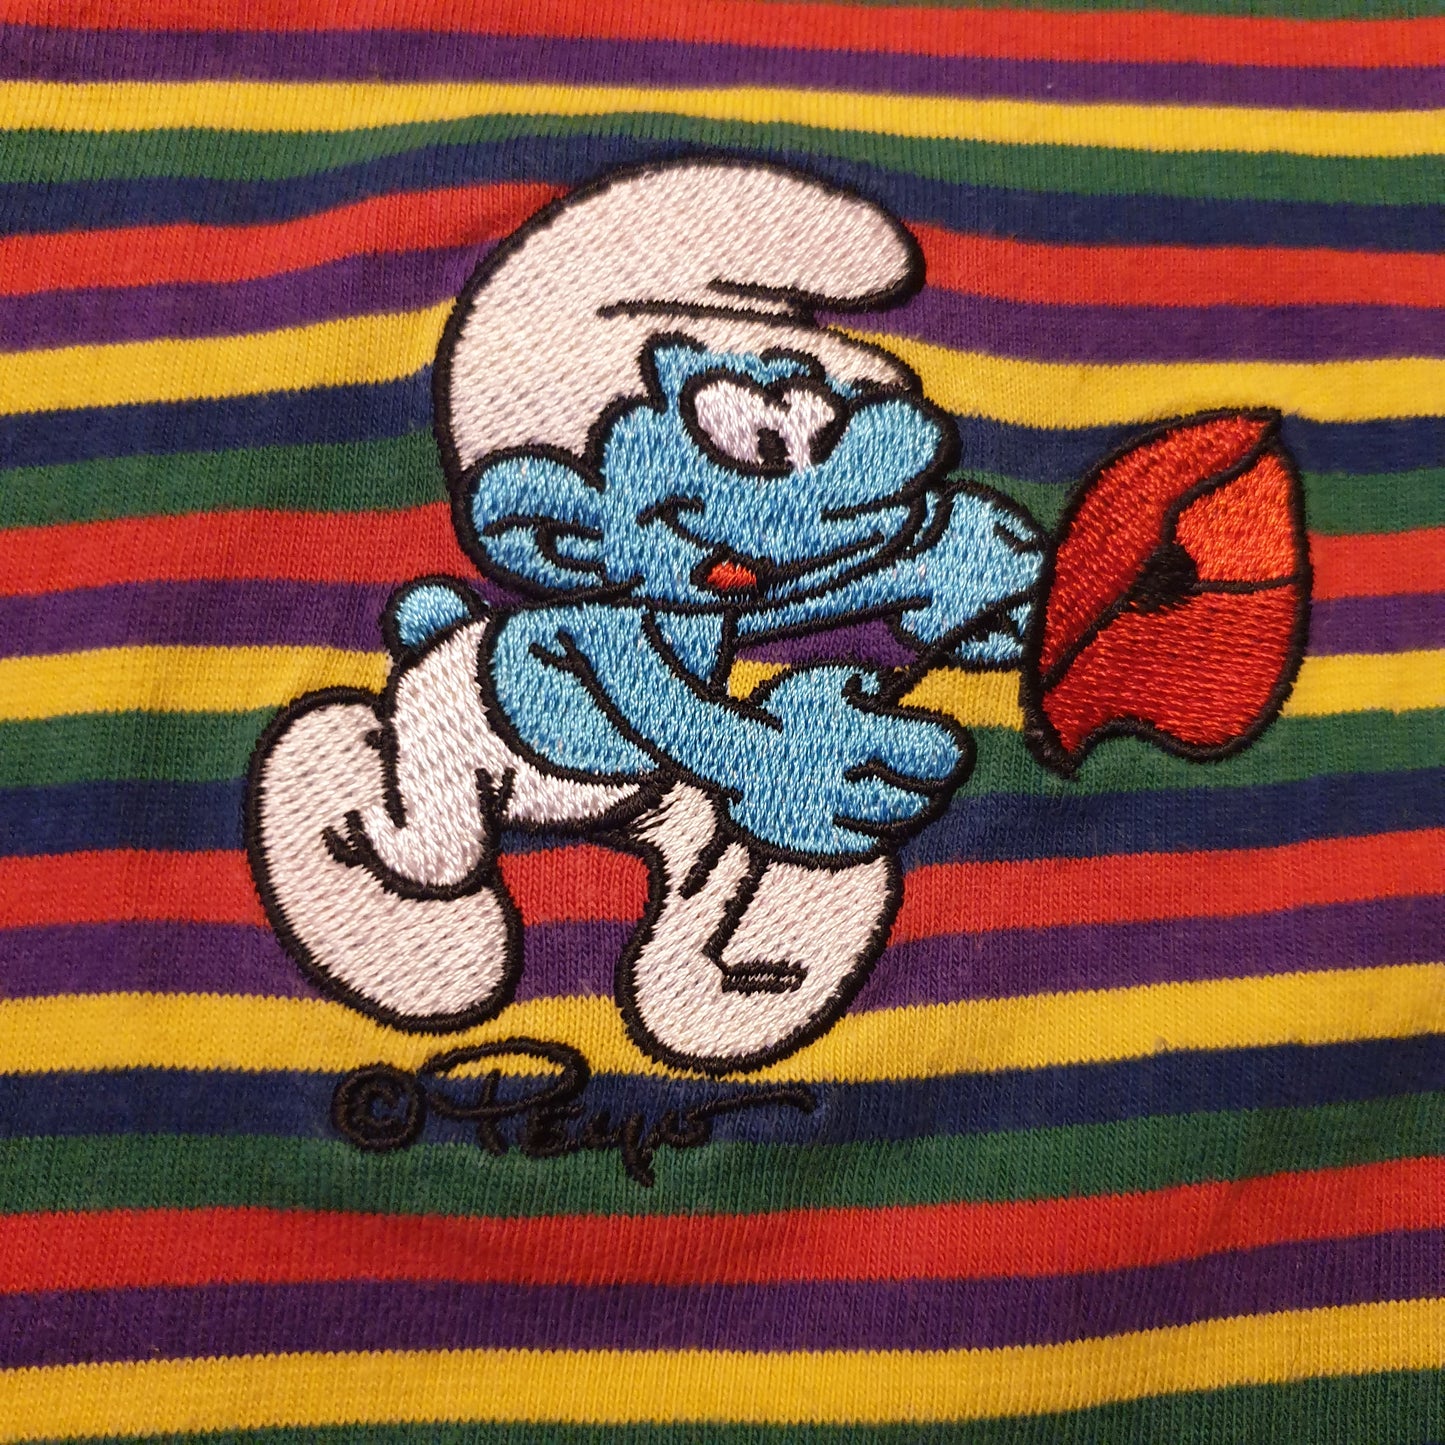 The Smurfs T-Shirt S